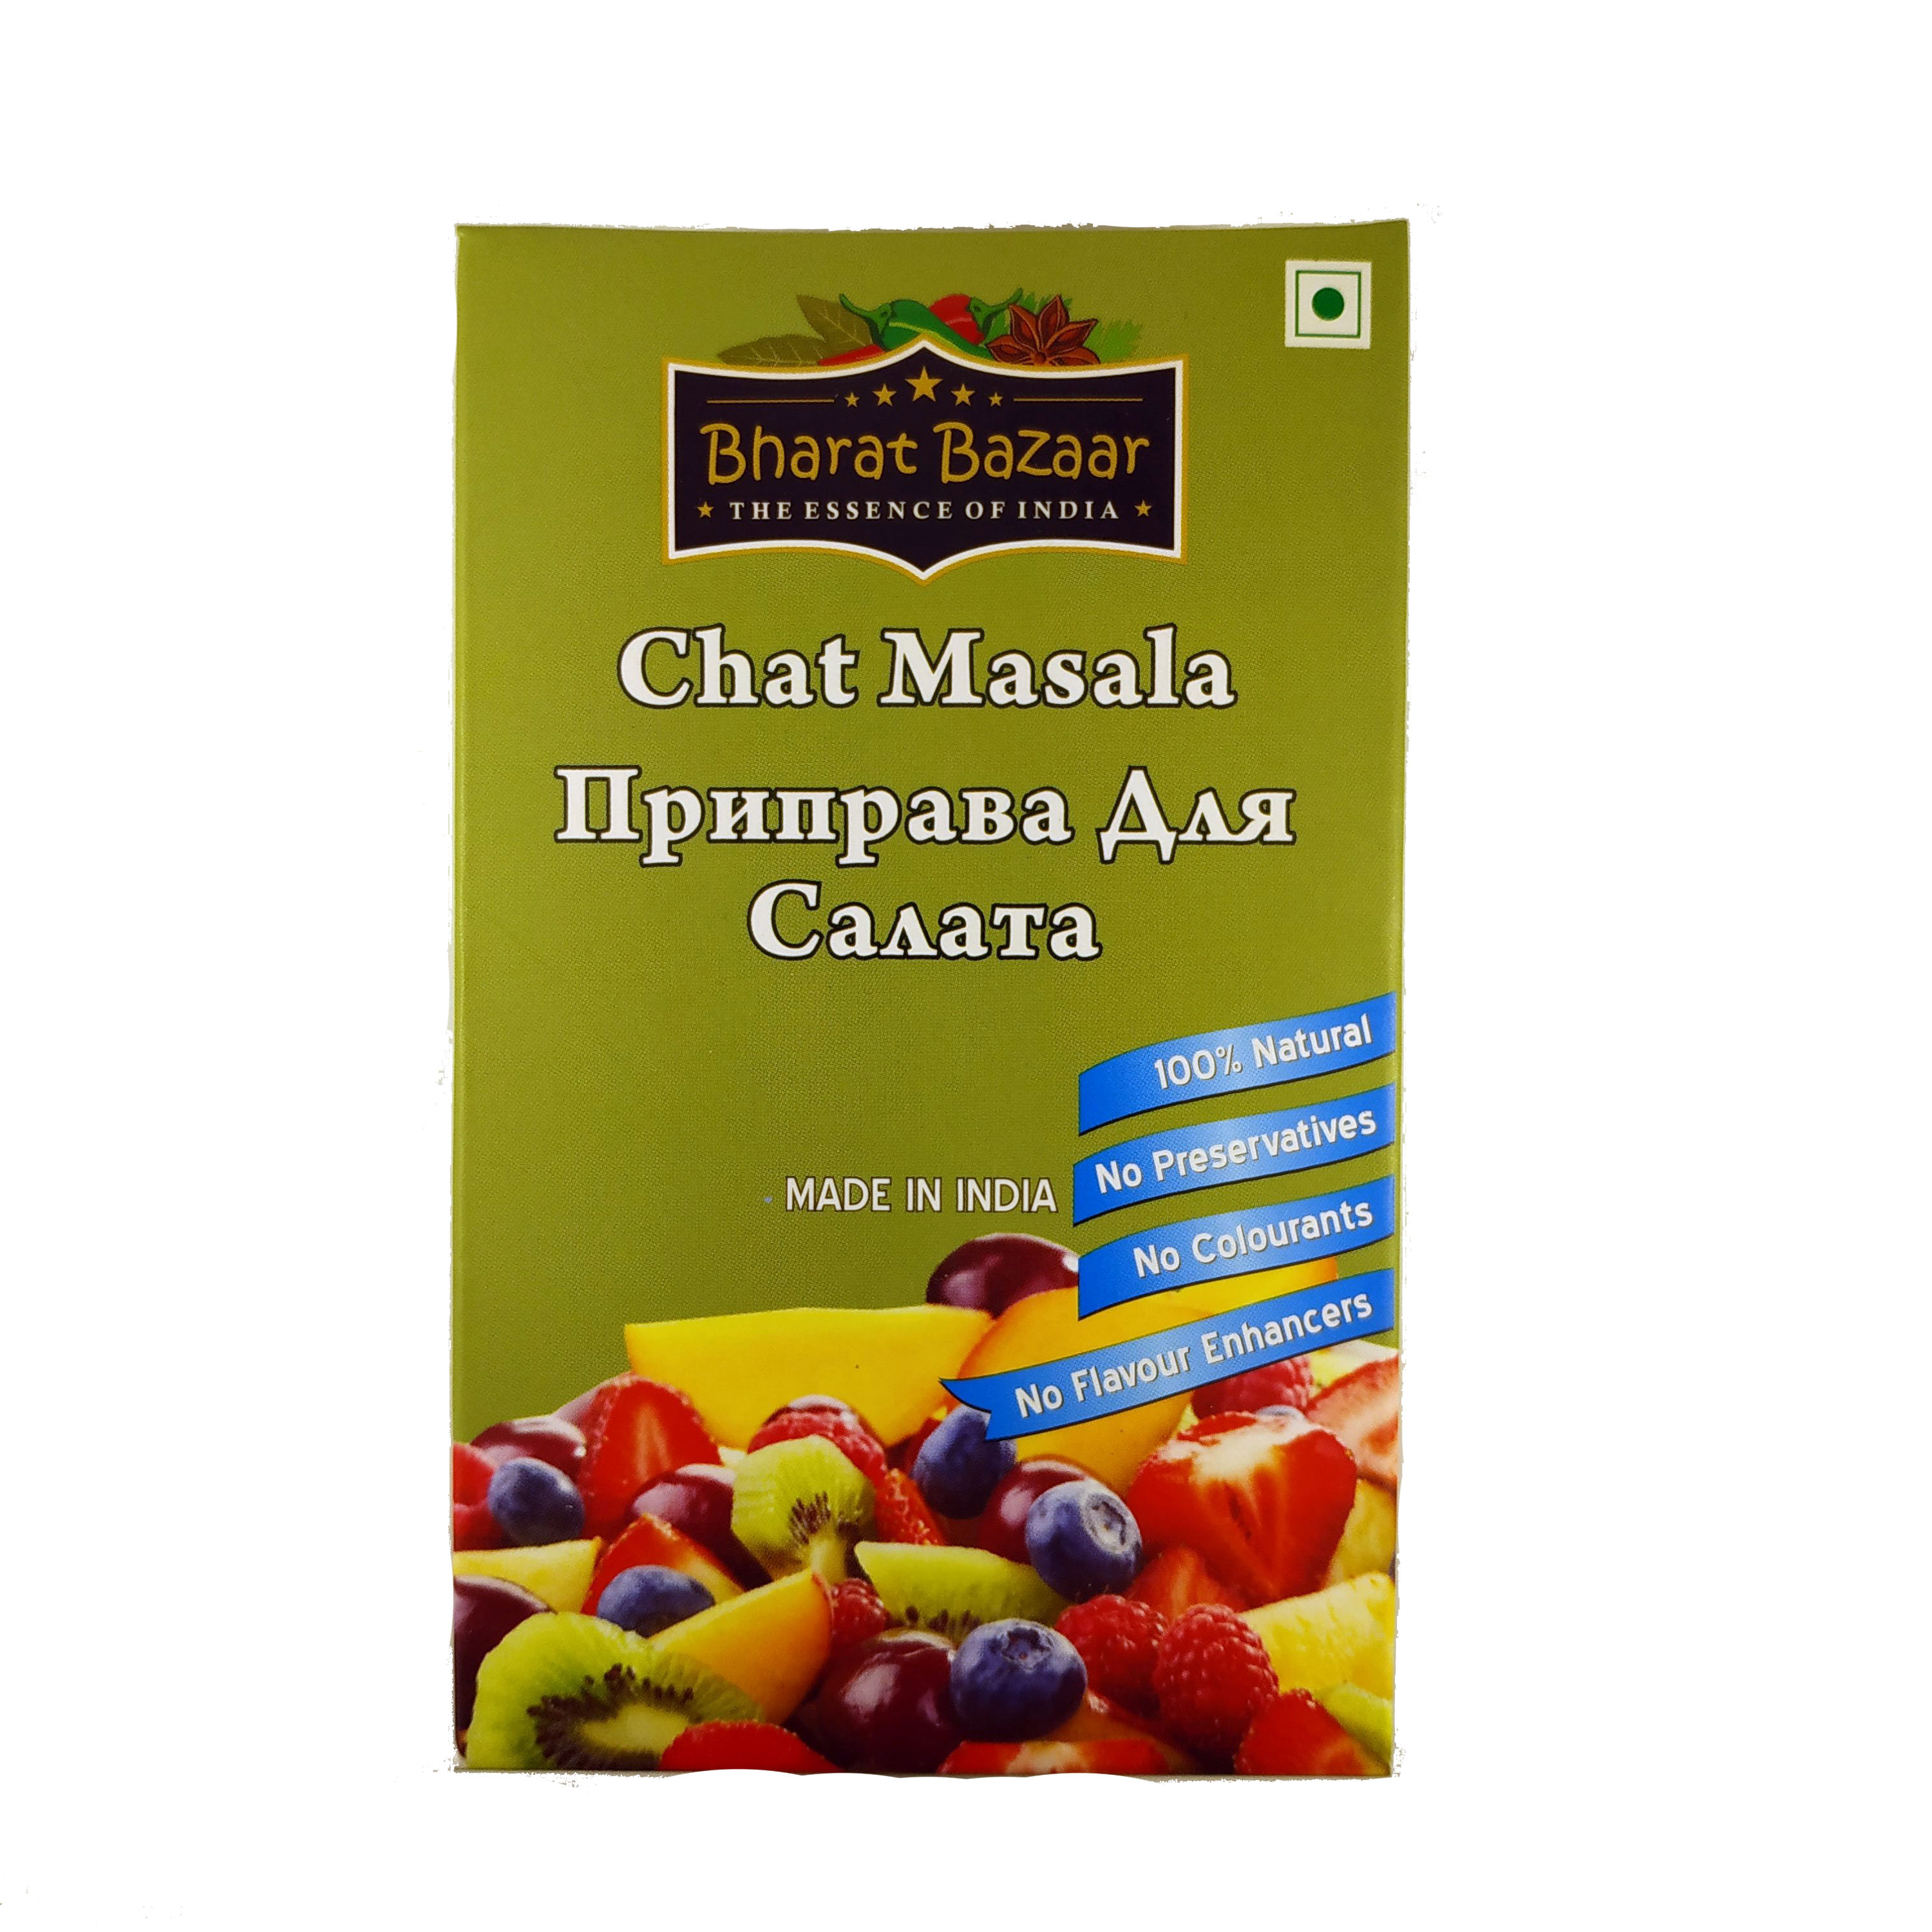 CHAT MASALA Bharat Bazaar (Приправа Для Салата, коробка, Бхарат Базар), 100 г.